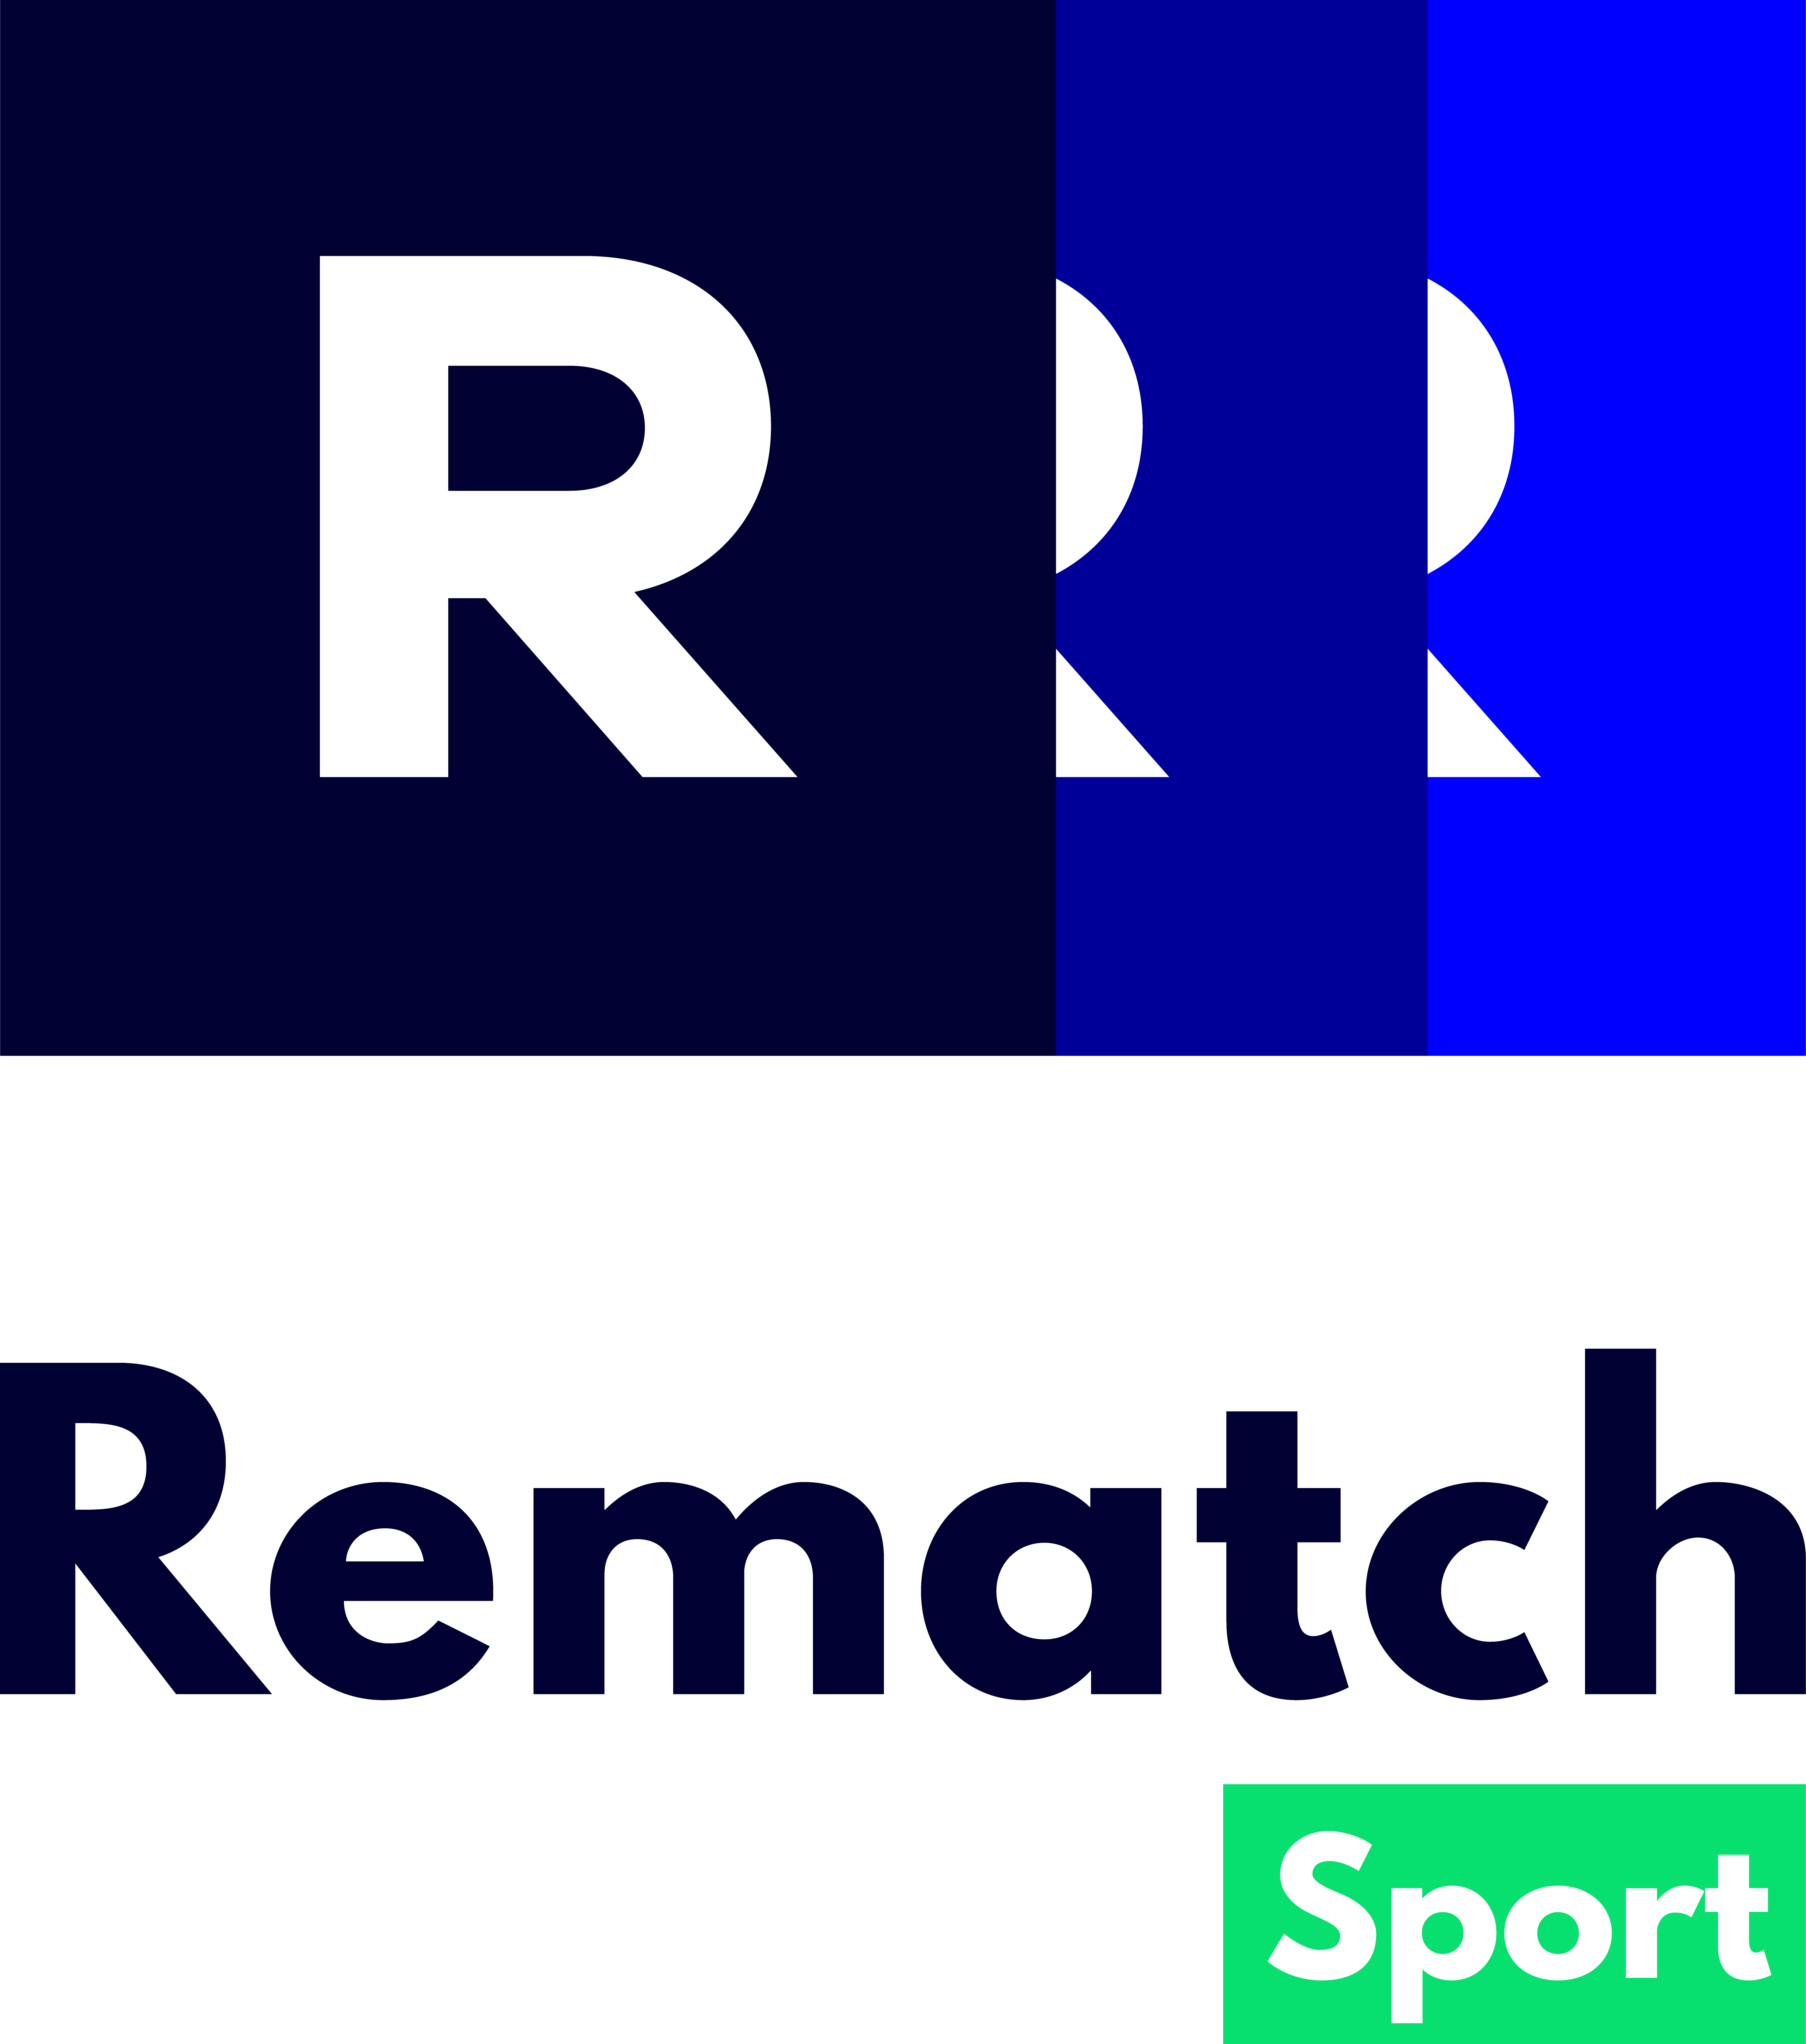 Logo Rematch